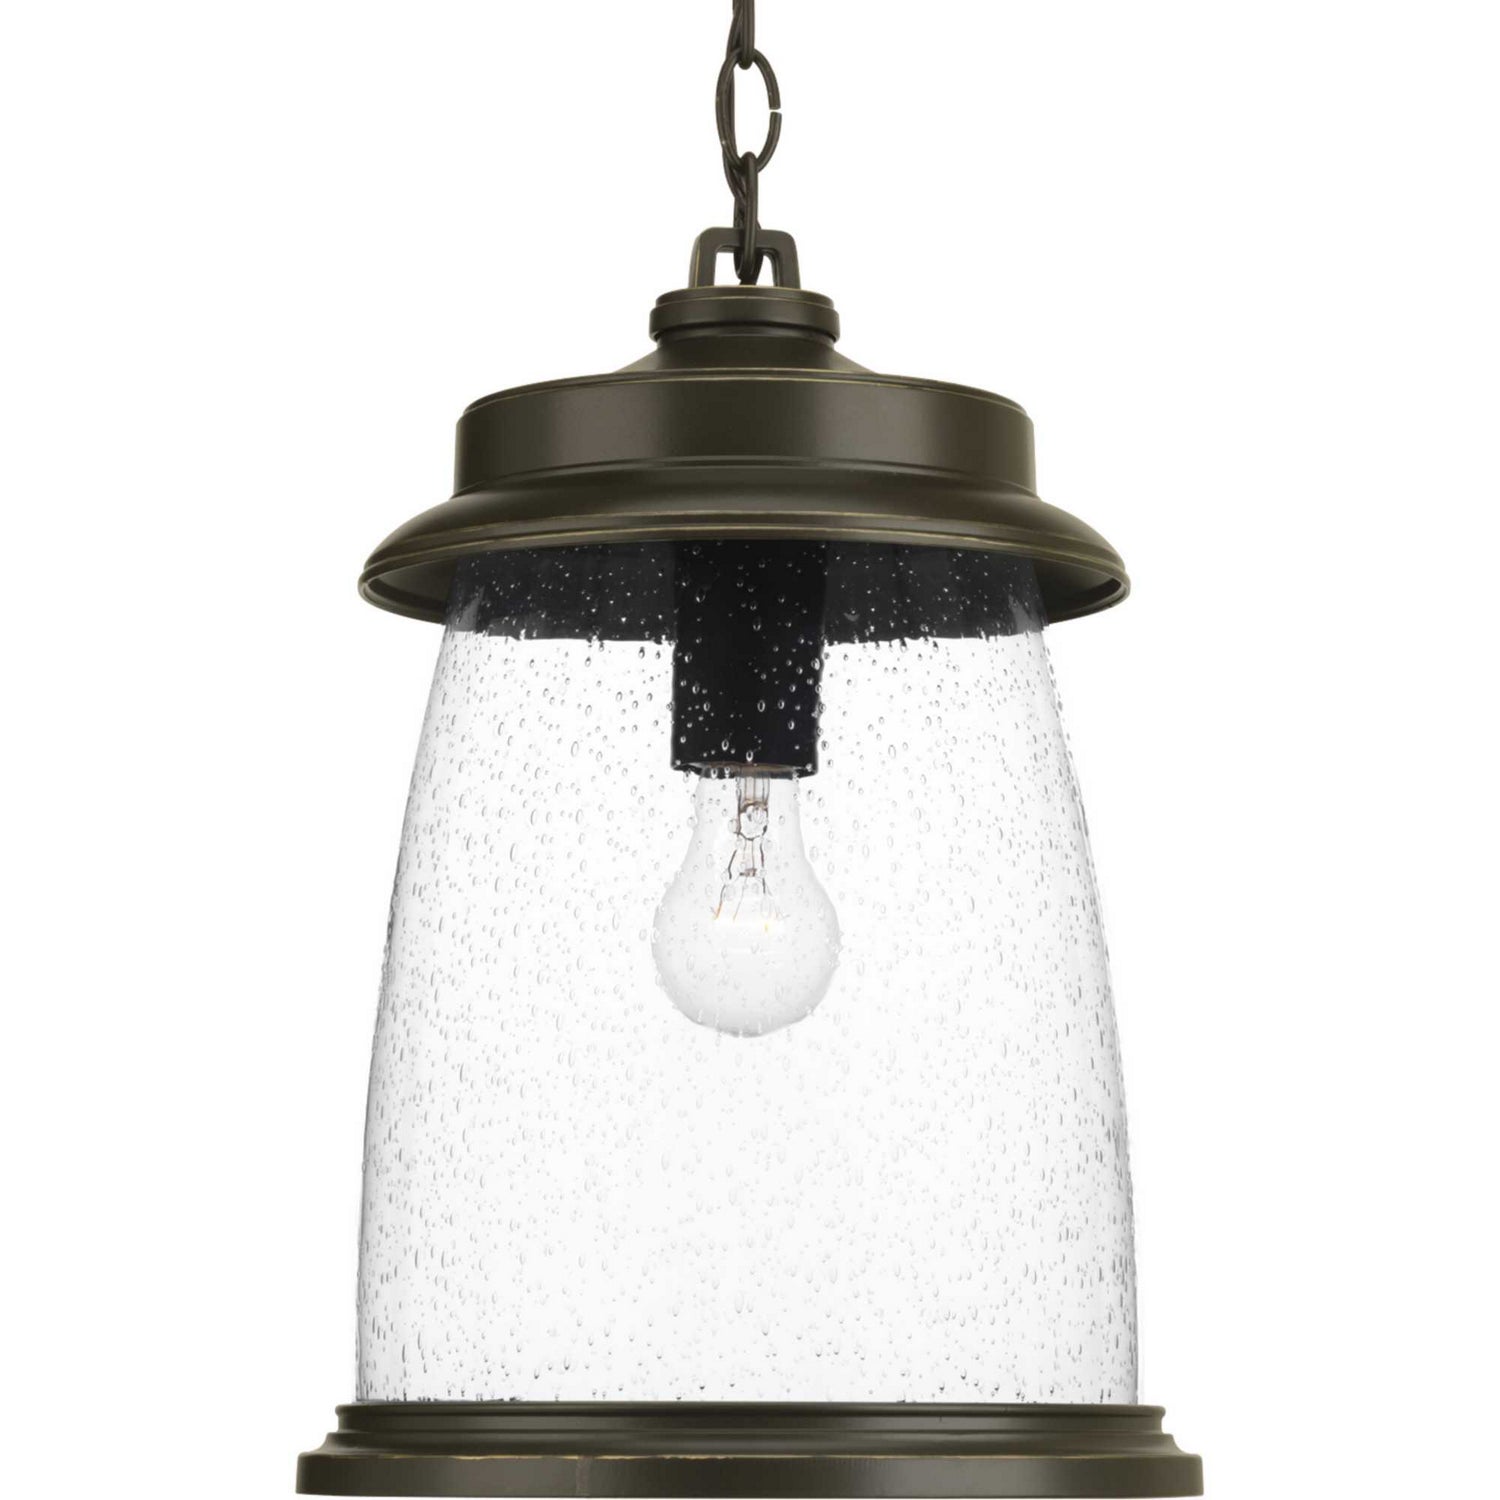 Progress Canada - One Light Hanging Lantern - Conover - Antique Bronze- Union Lighting Luminaires Decor